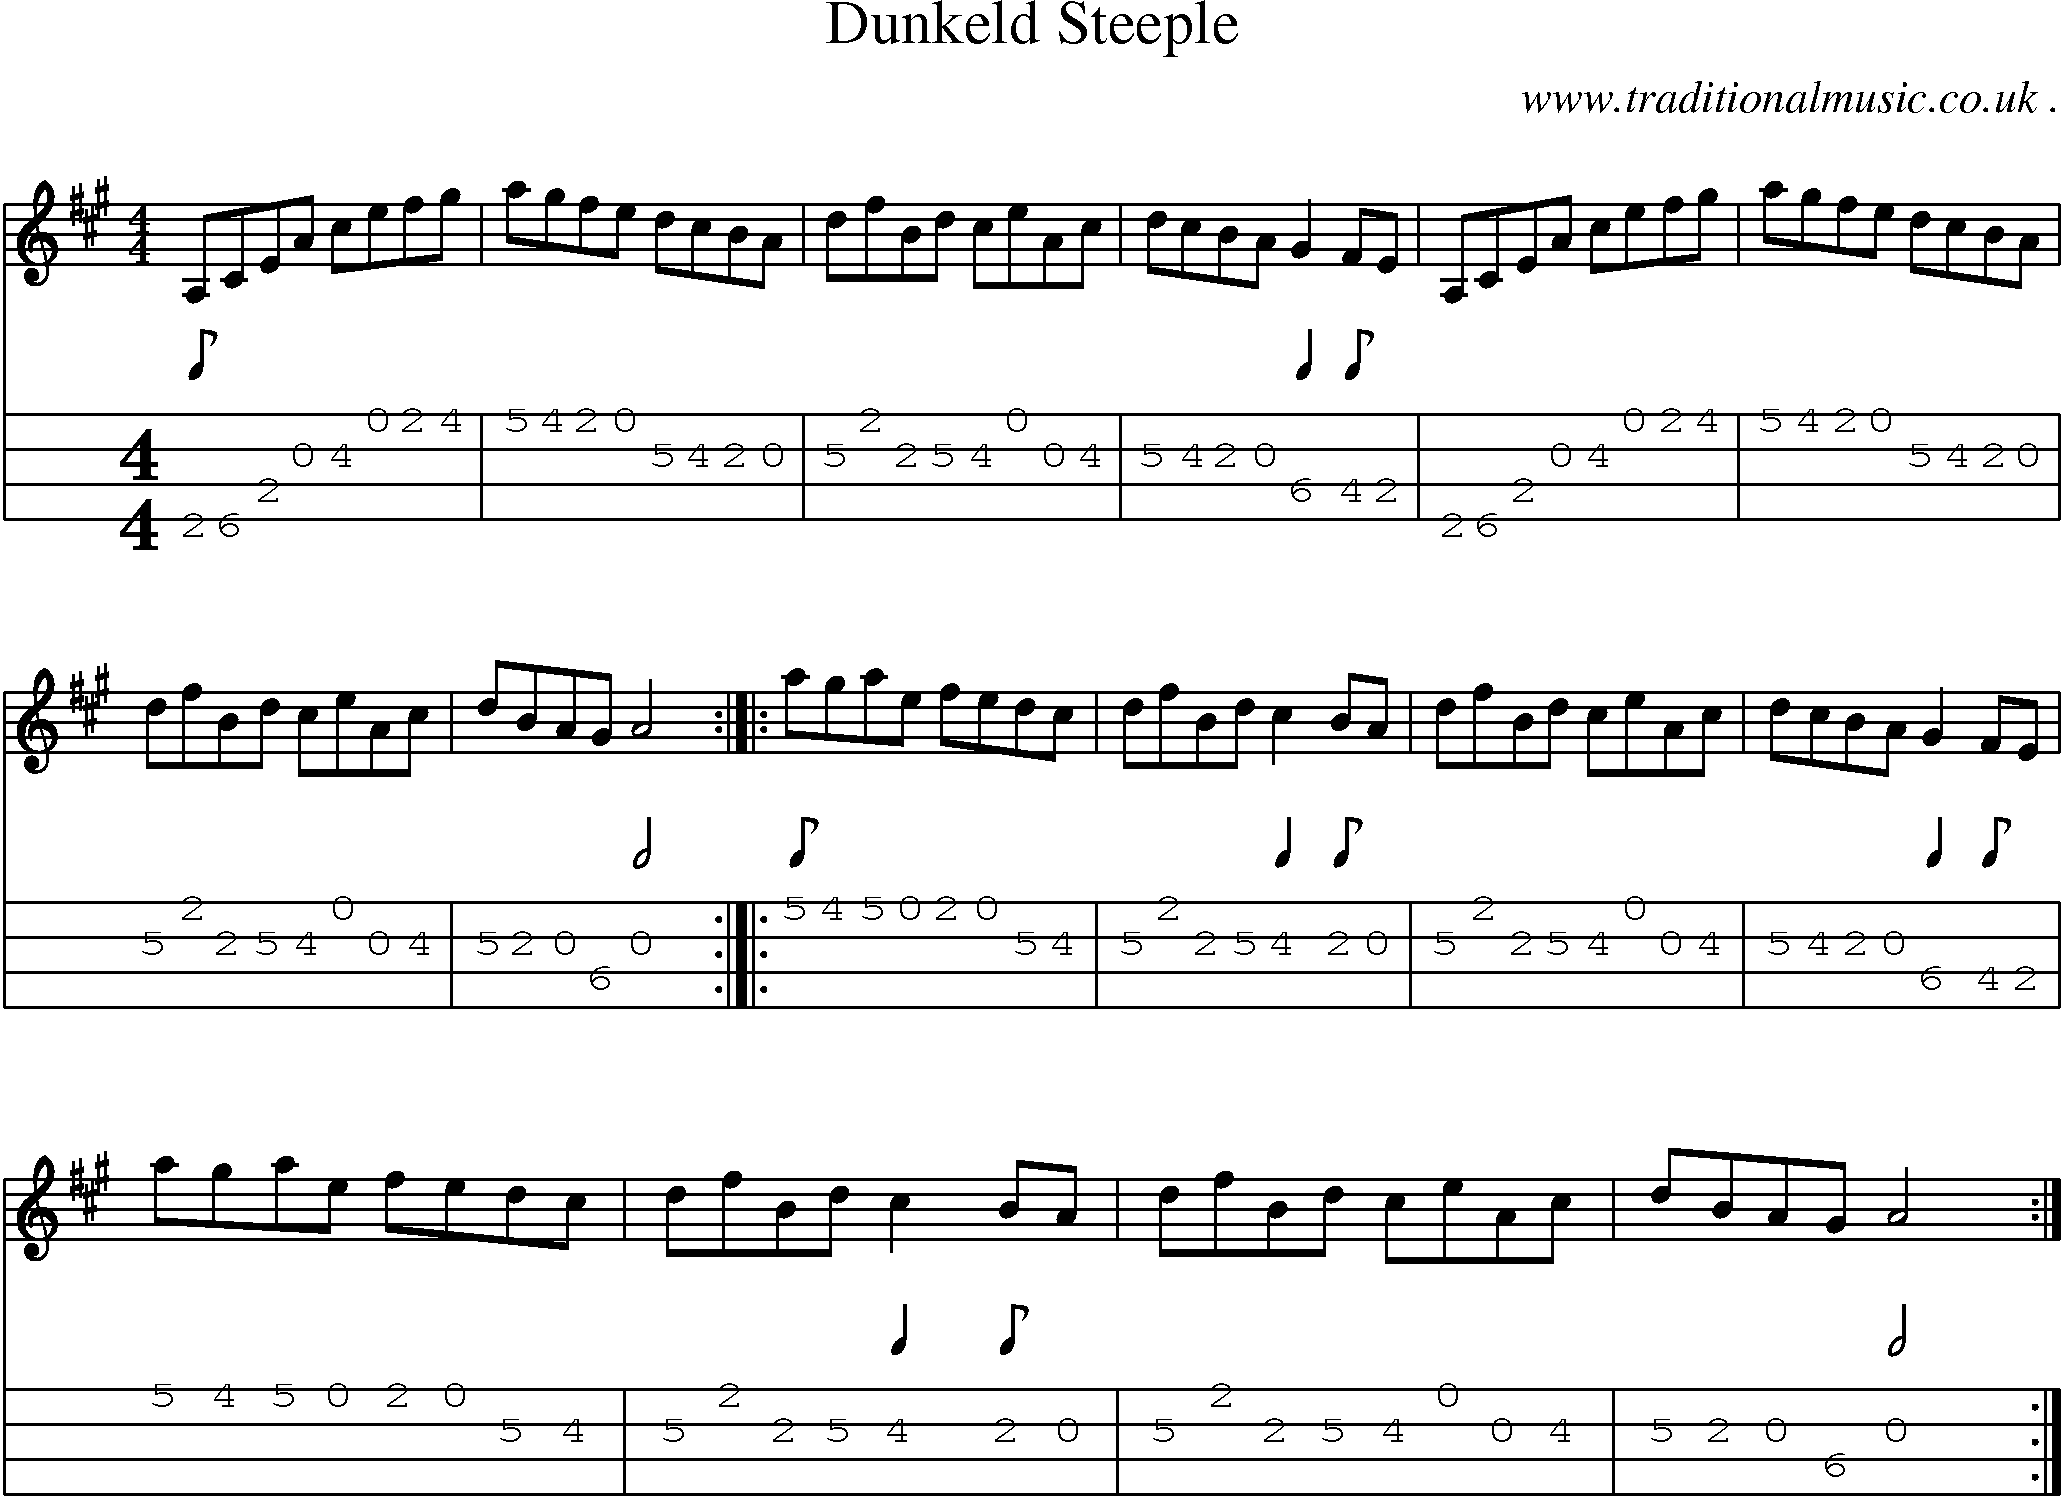 Sheet-music  score, Chords and Mandolin Tabs for Dunkeld Steeple